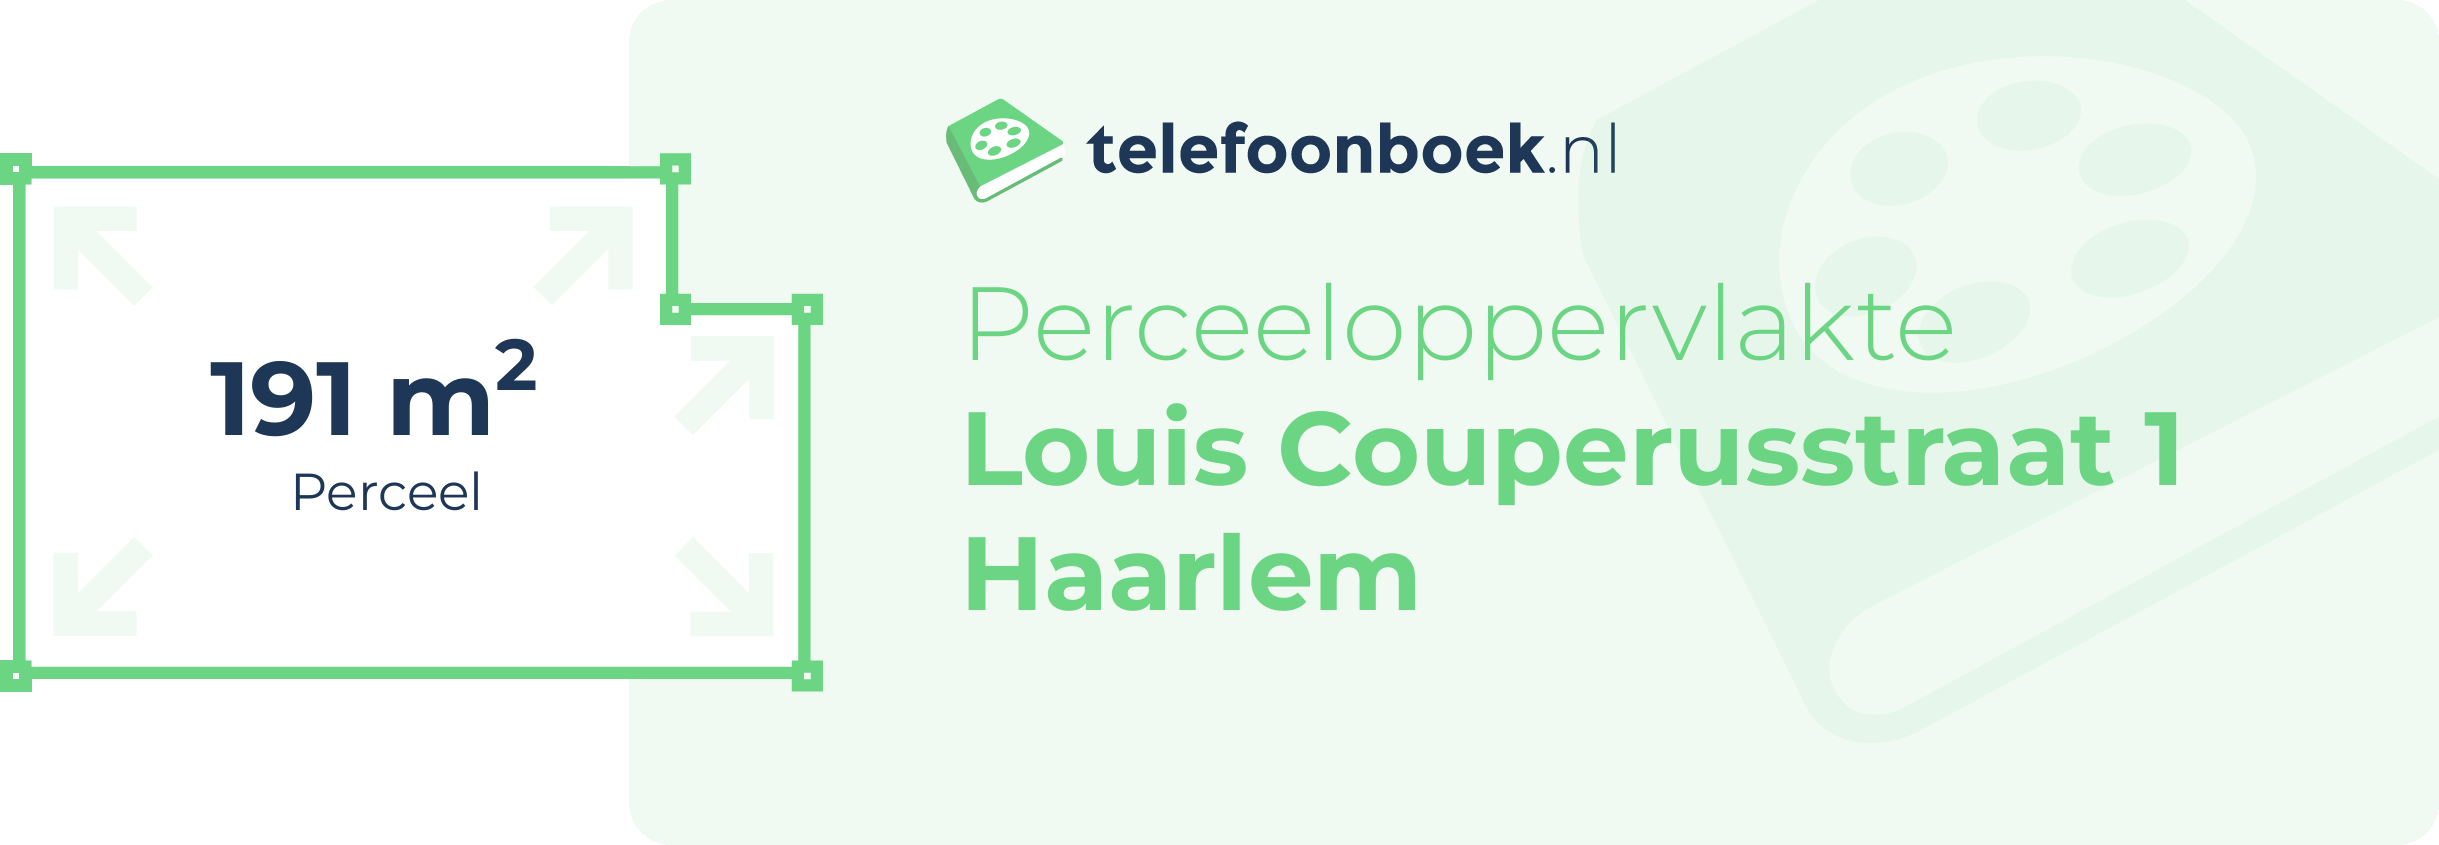 Perceeloppervlakte Louis Couperusstraat 1 Haarlem